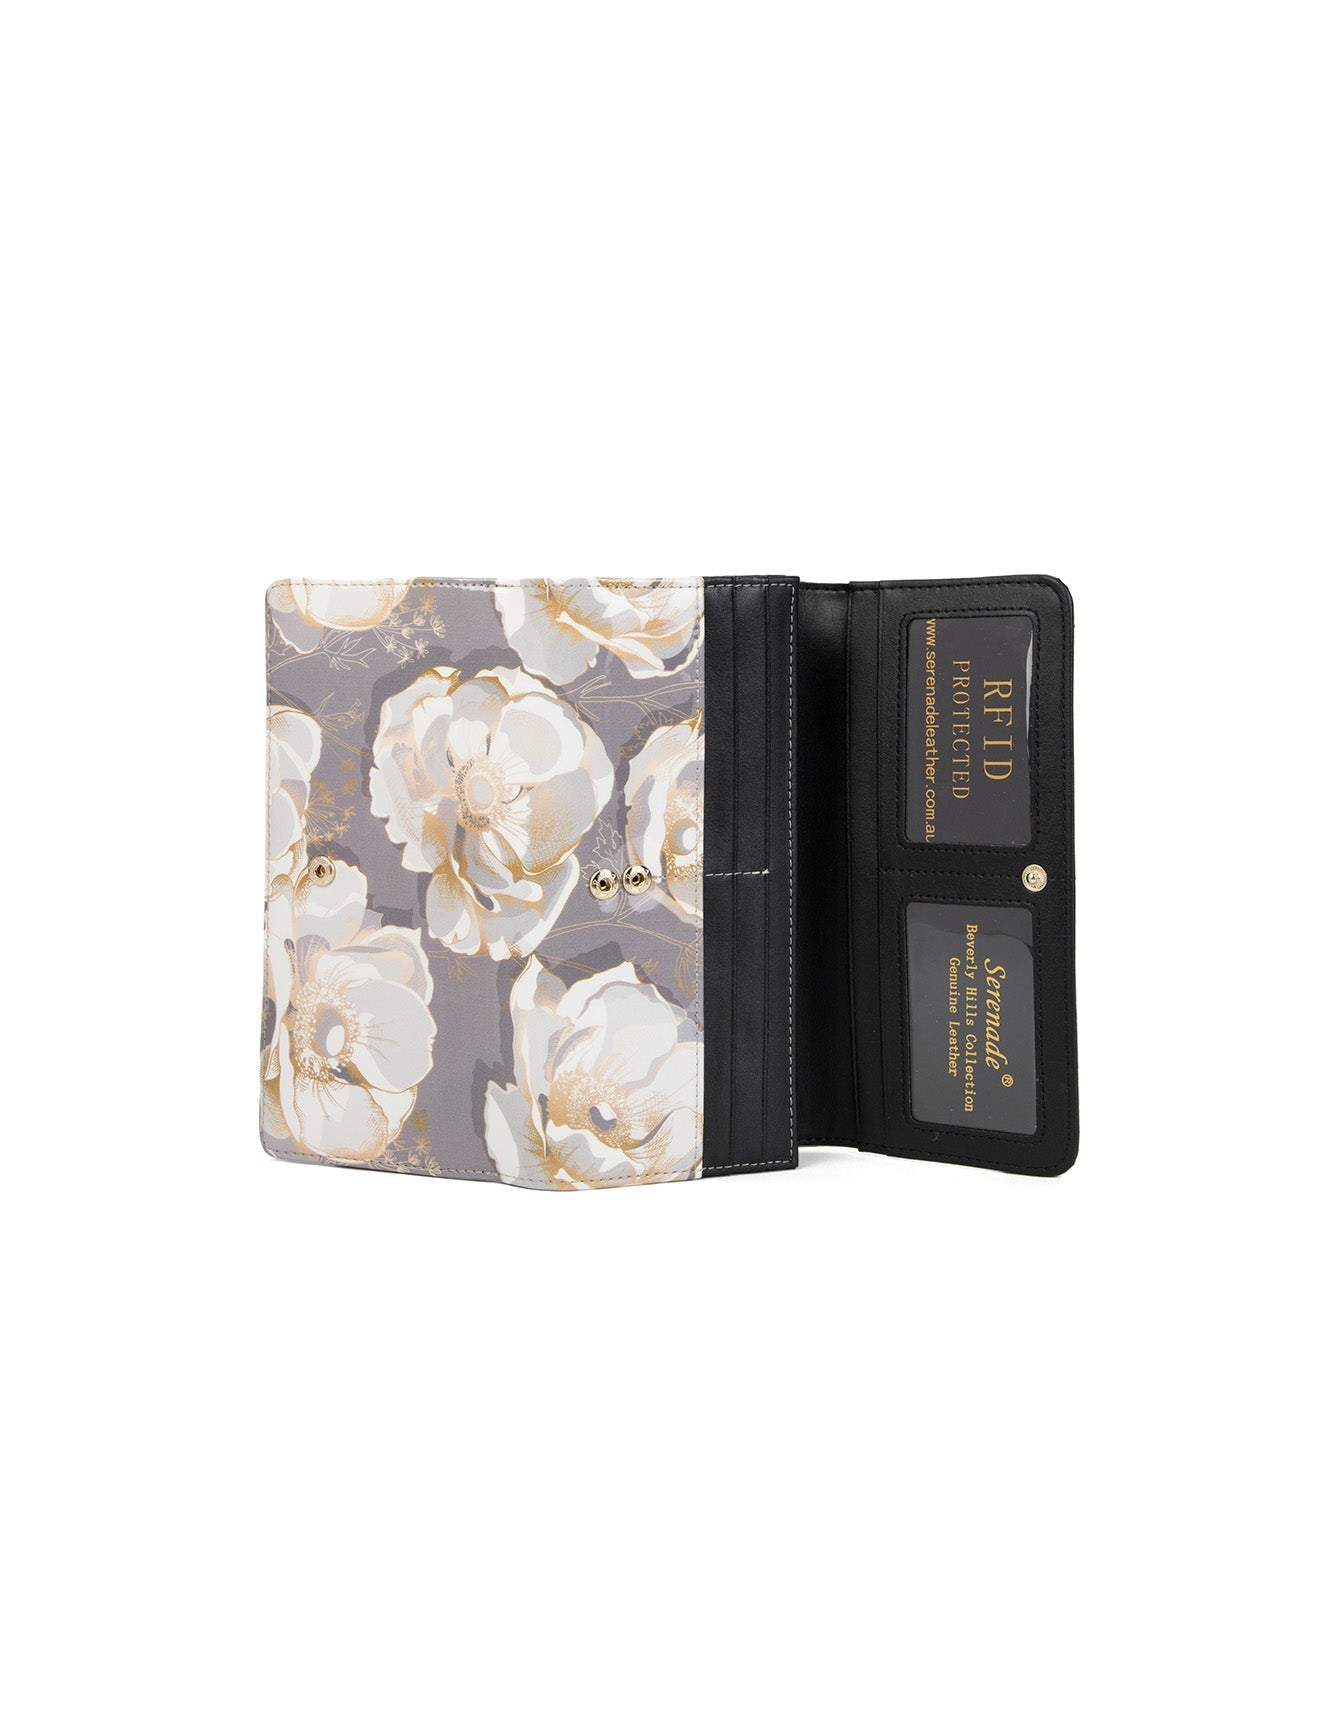 Serenade - WSN7701 Annalise Large wallet - Floral-6